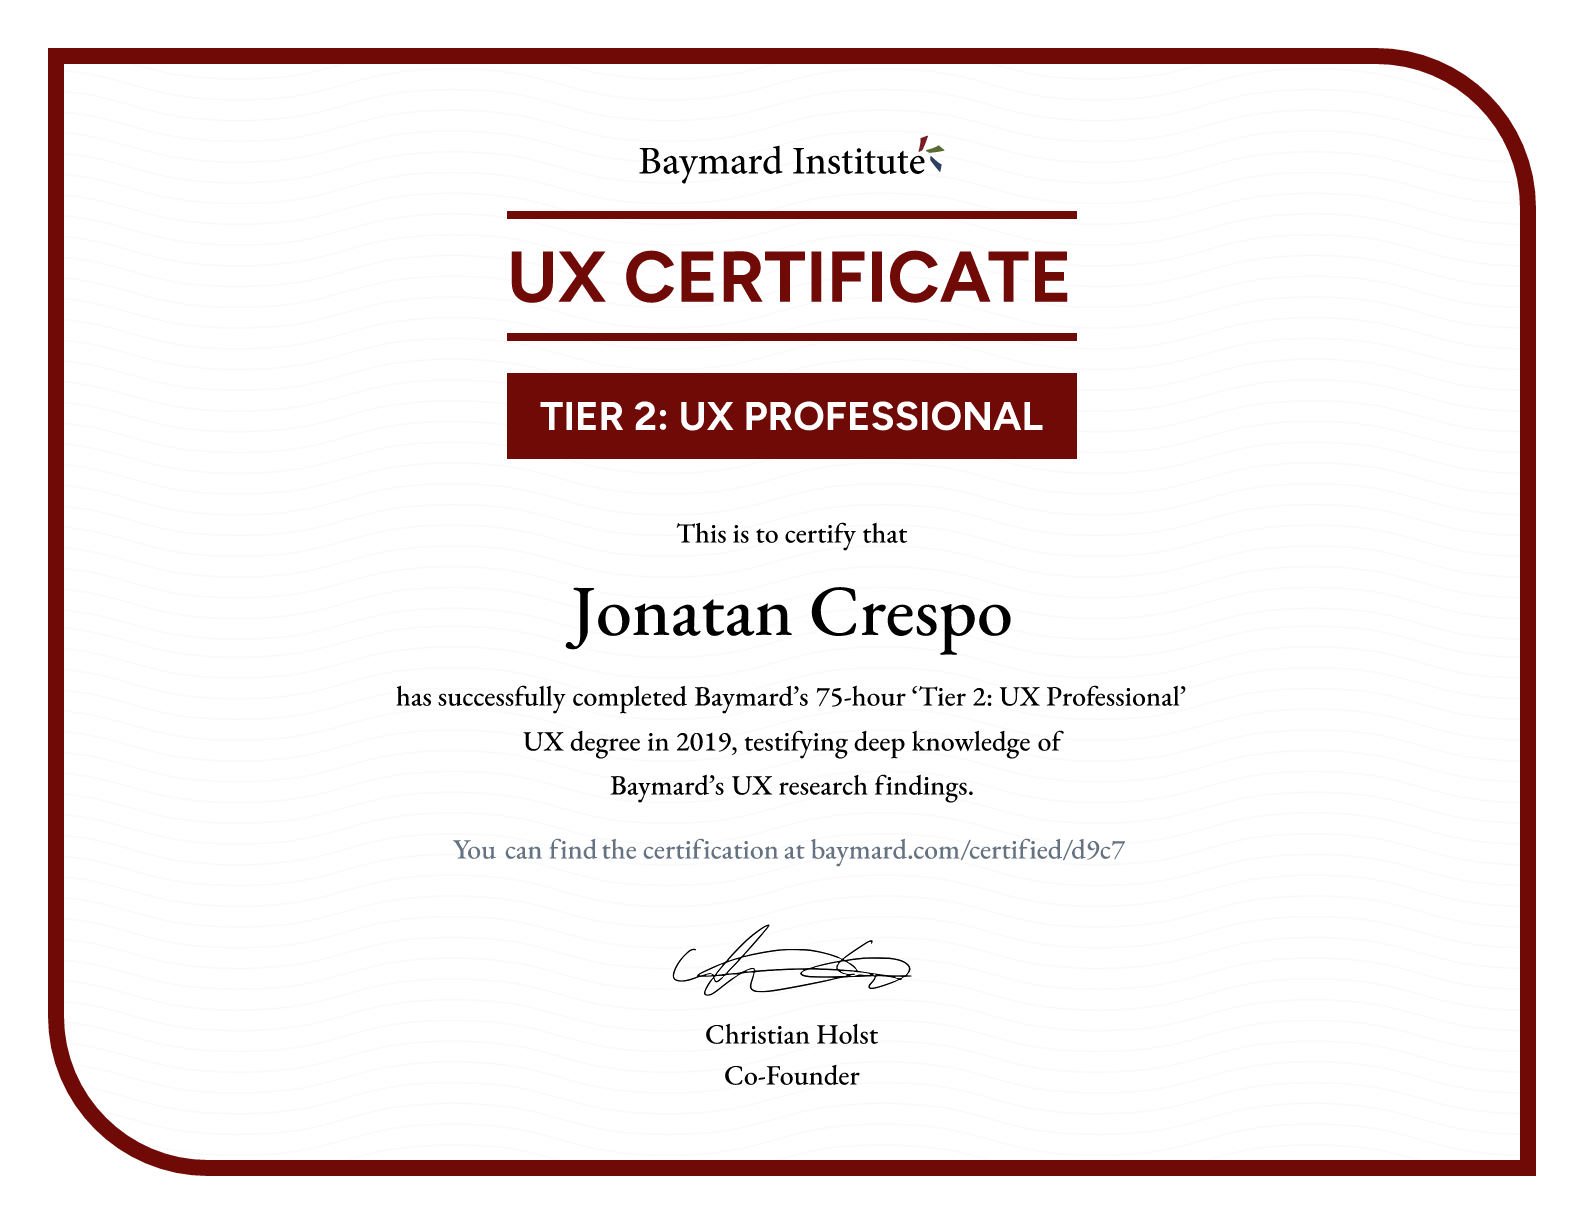 Jonatan Crespo’s certificate